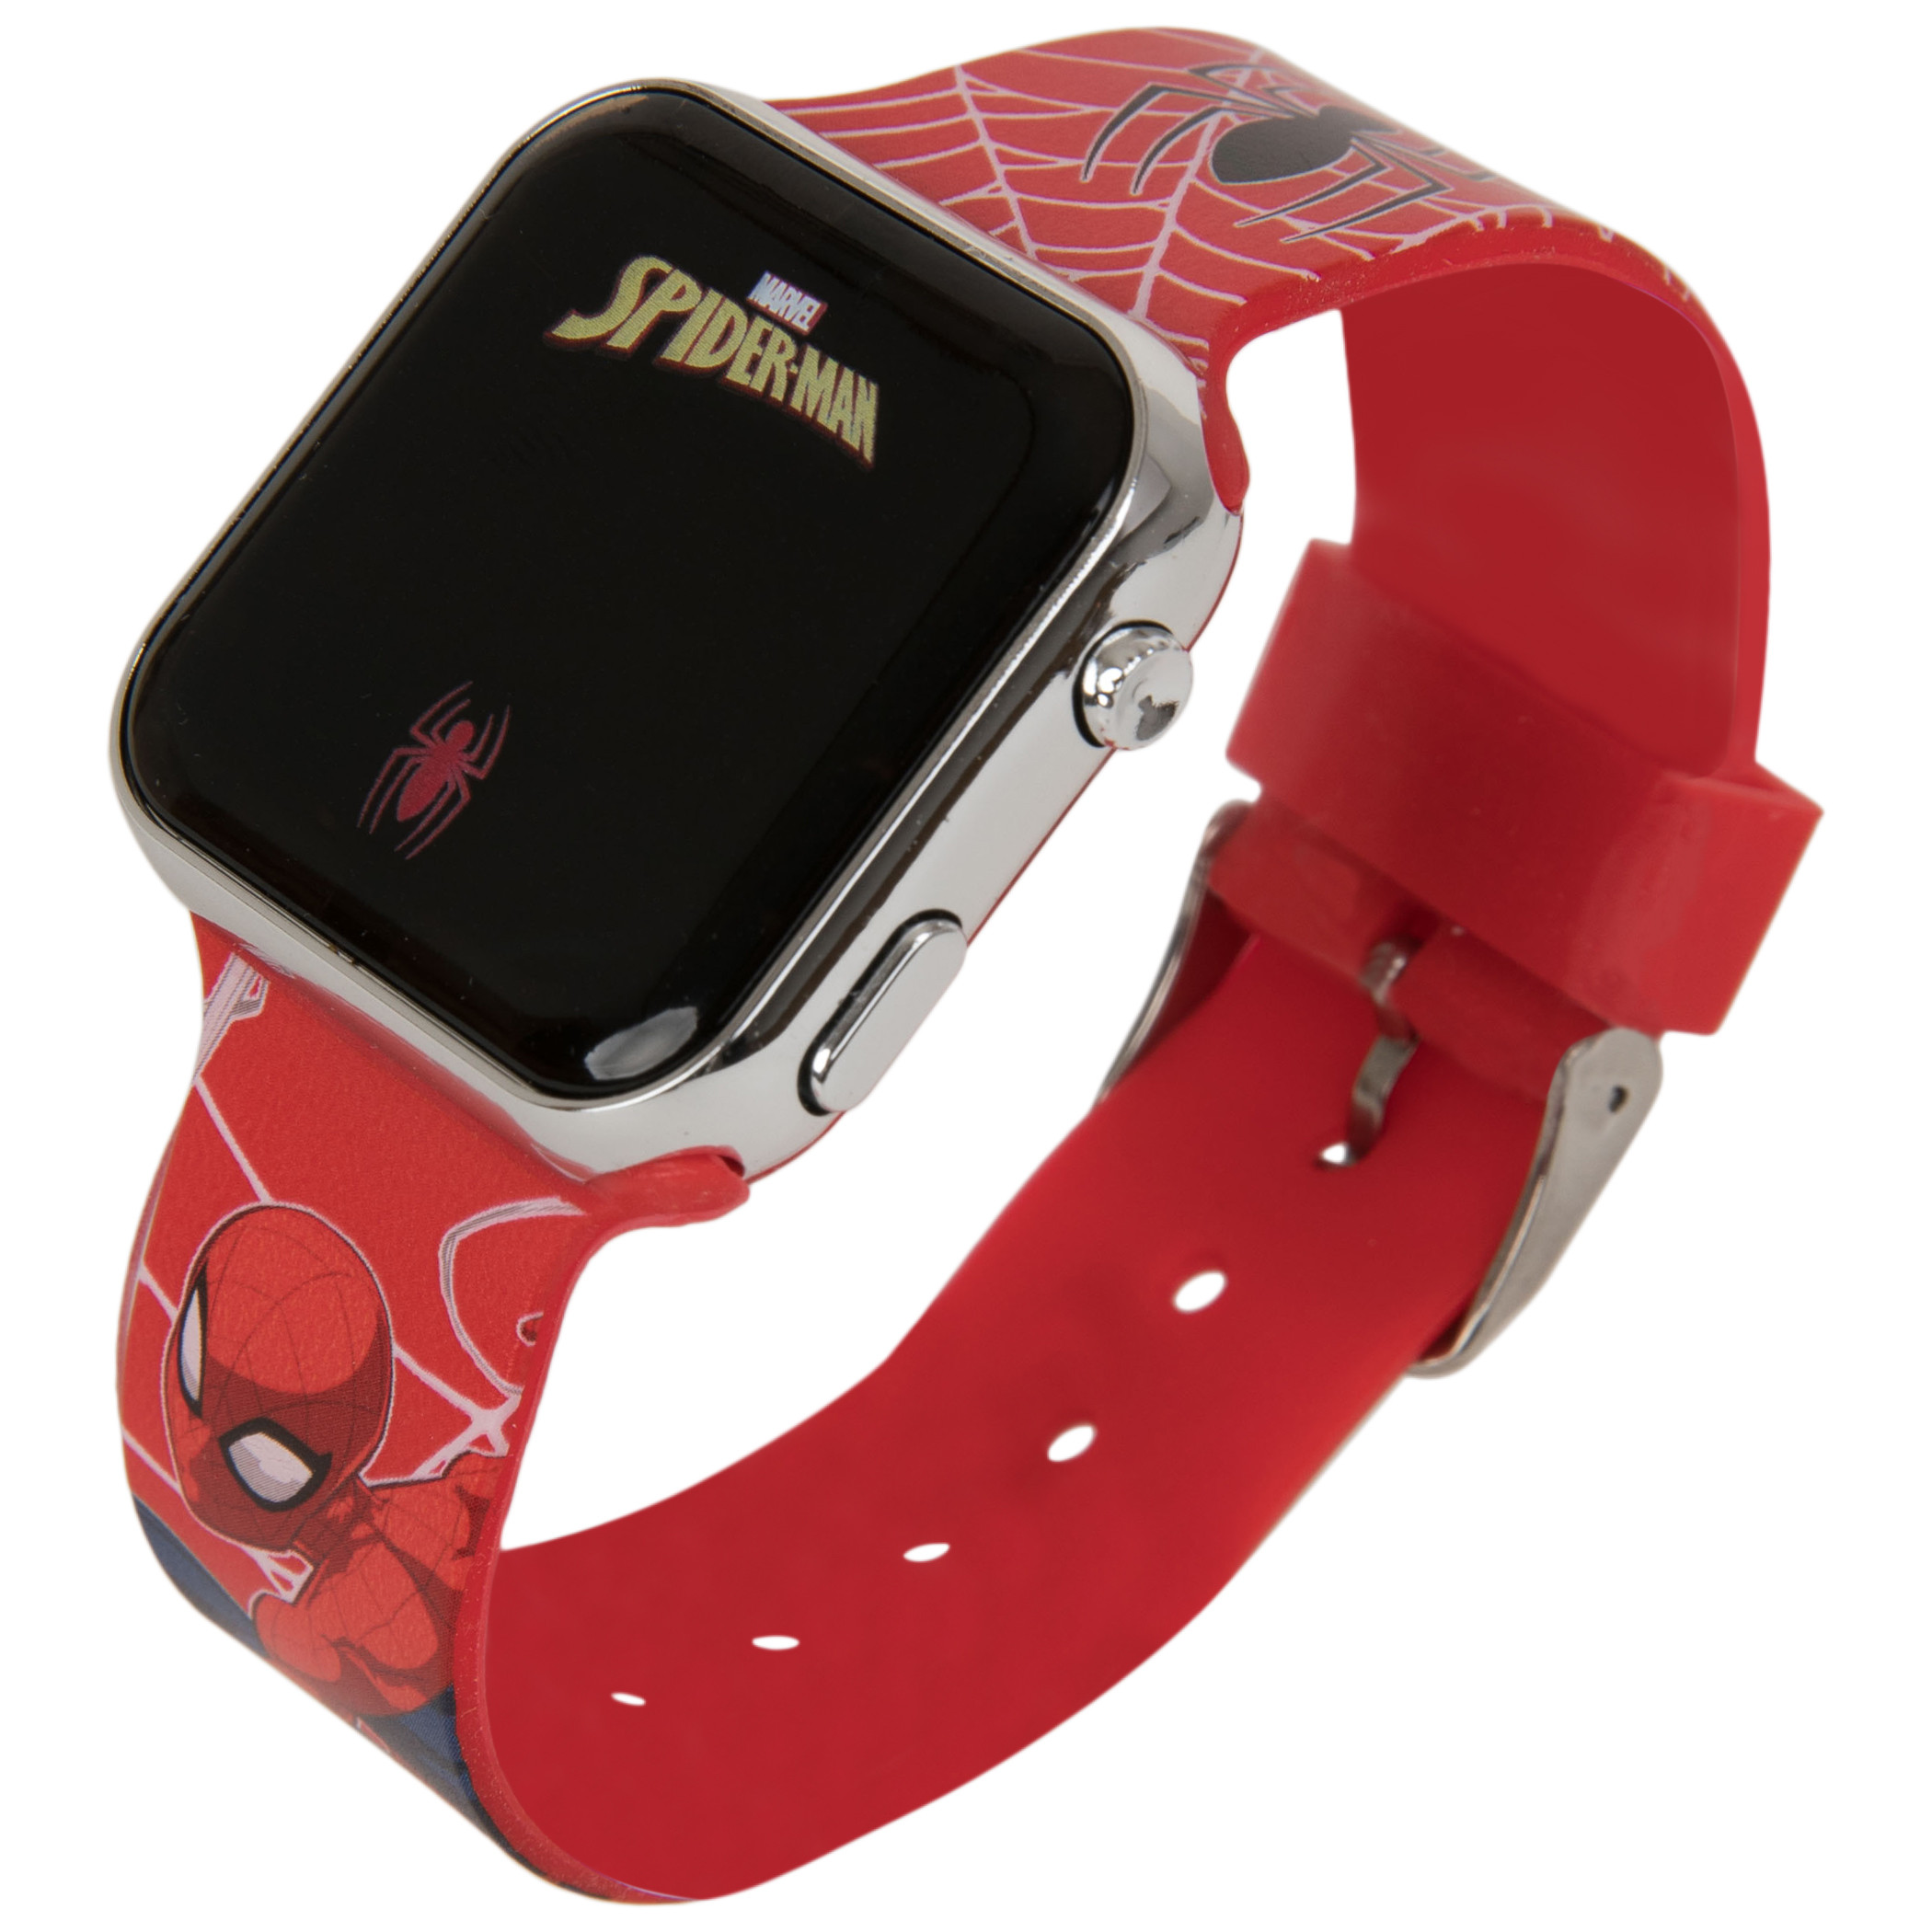 Spider-Man Web Design LED Screen Wrist Watch